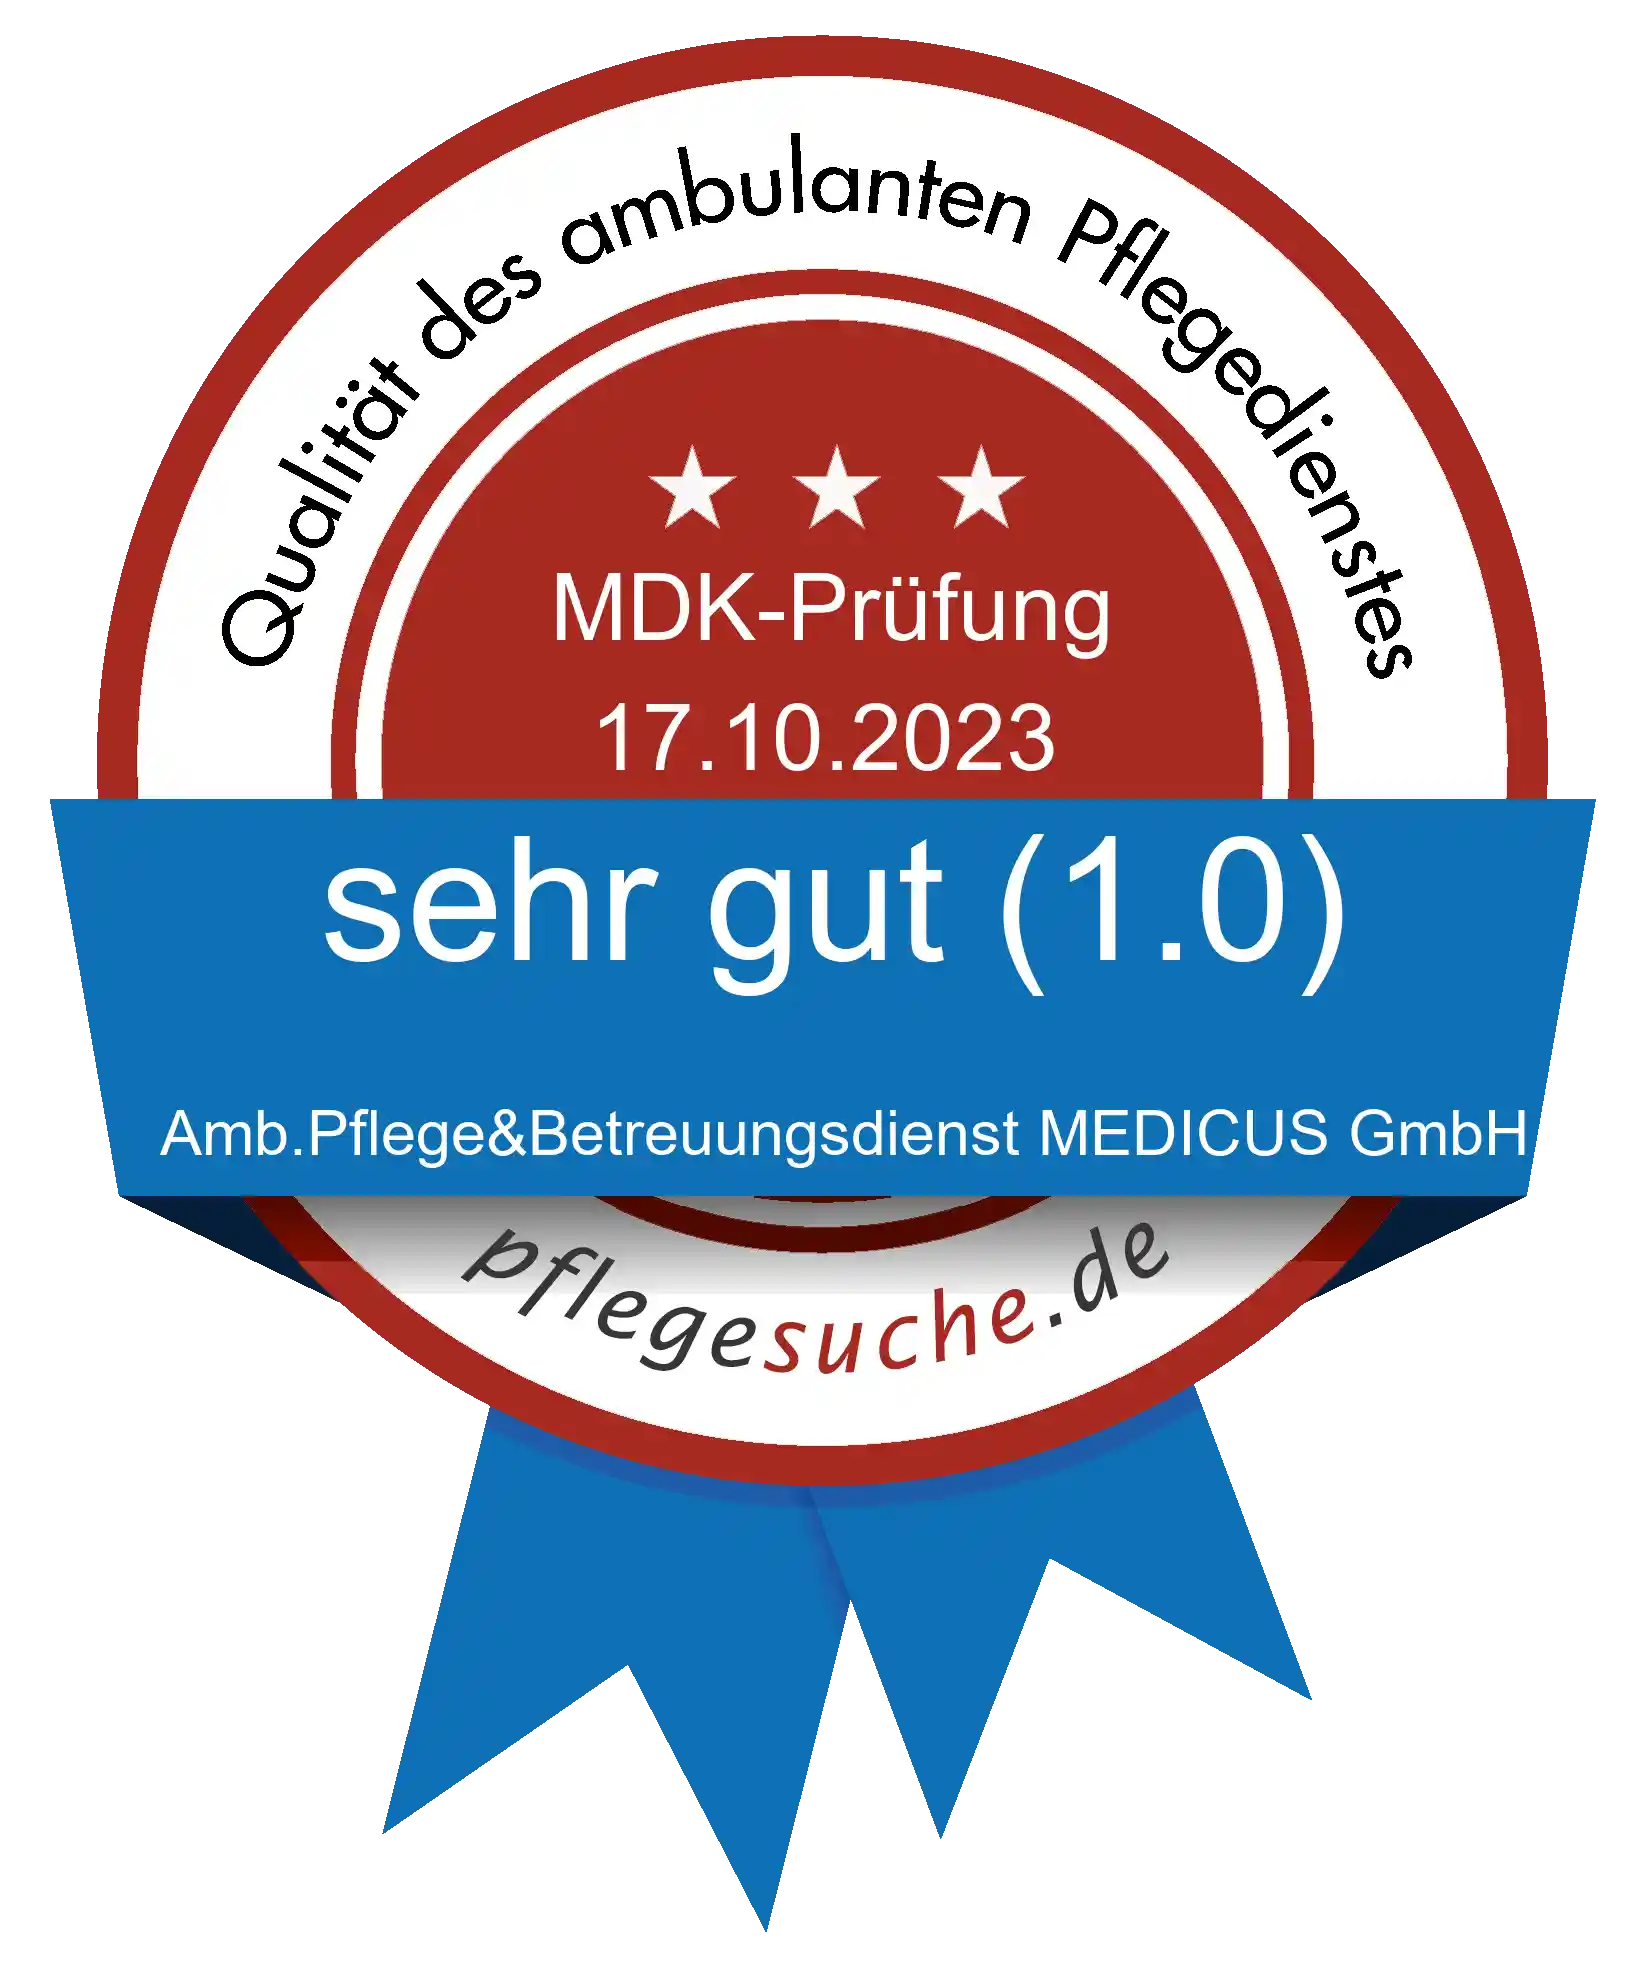 Siegel Benotung: Amb.Pflege&Betreuungsdienst MEDICUS GmbH